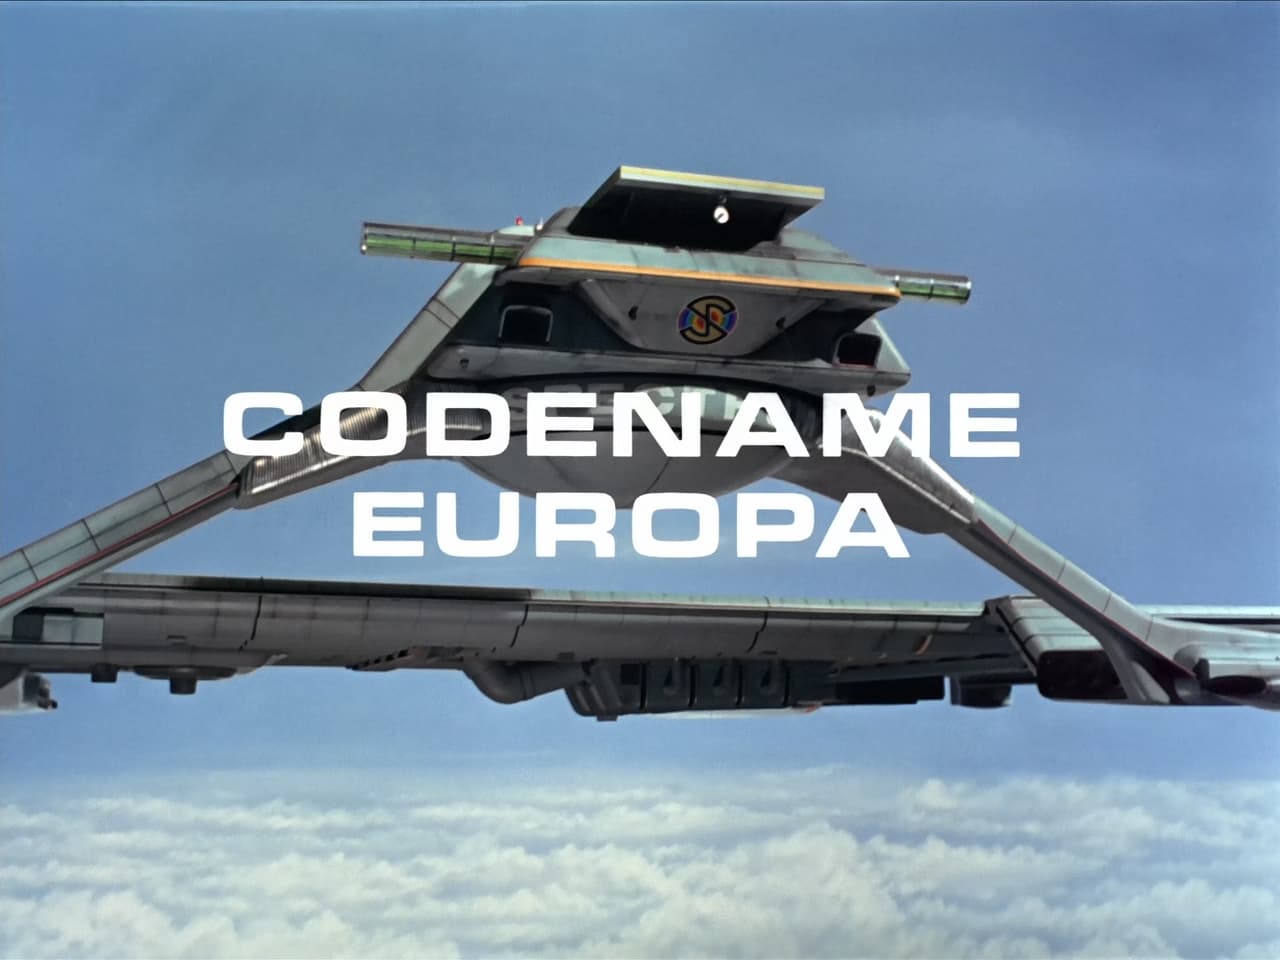 Codename Europa